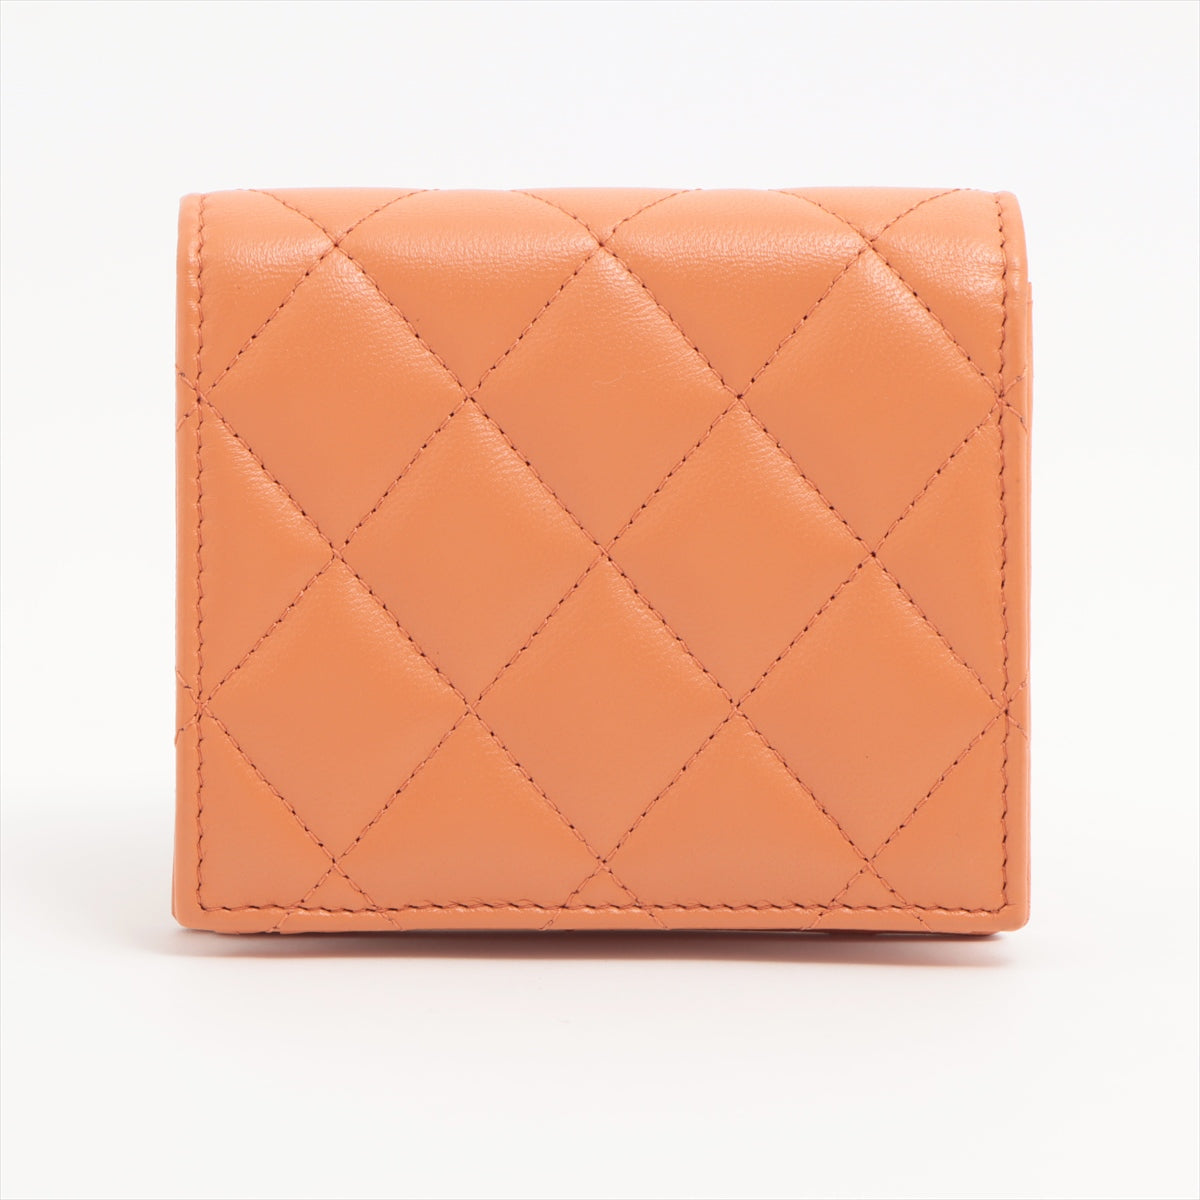 Chanel Matelasse Lambskin Compact Wallet Orange Gold Metal fittings random